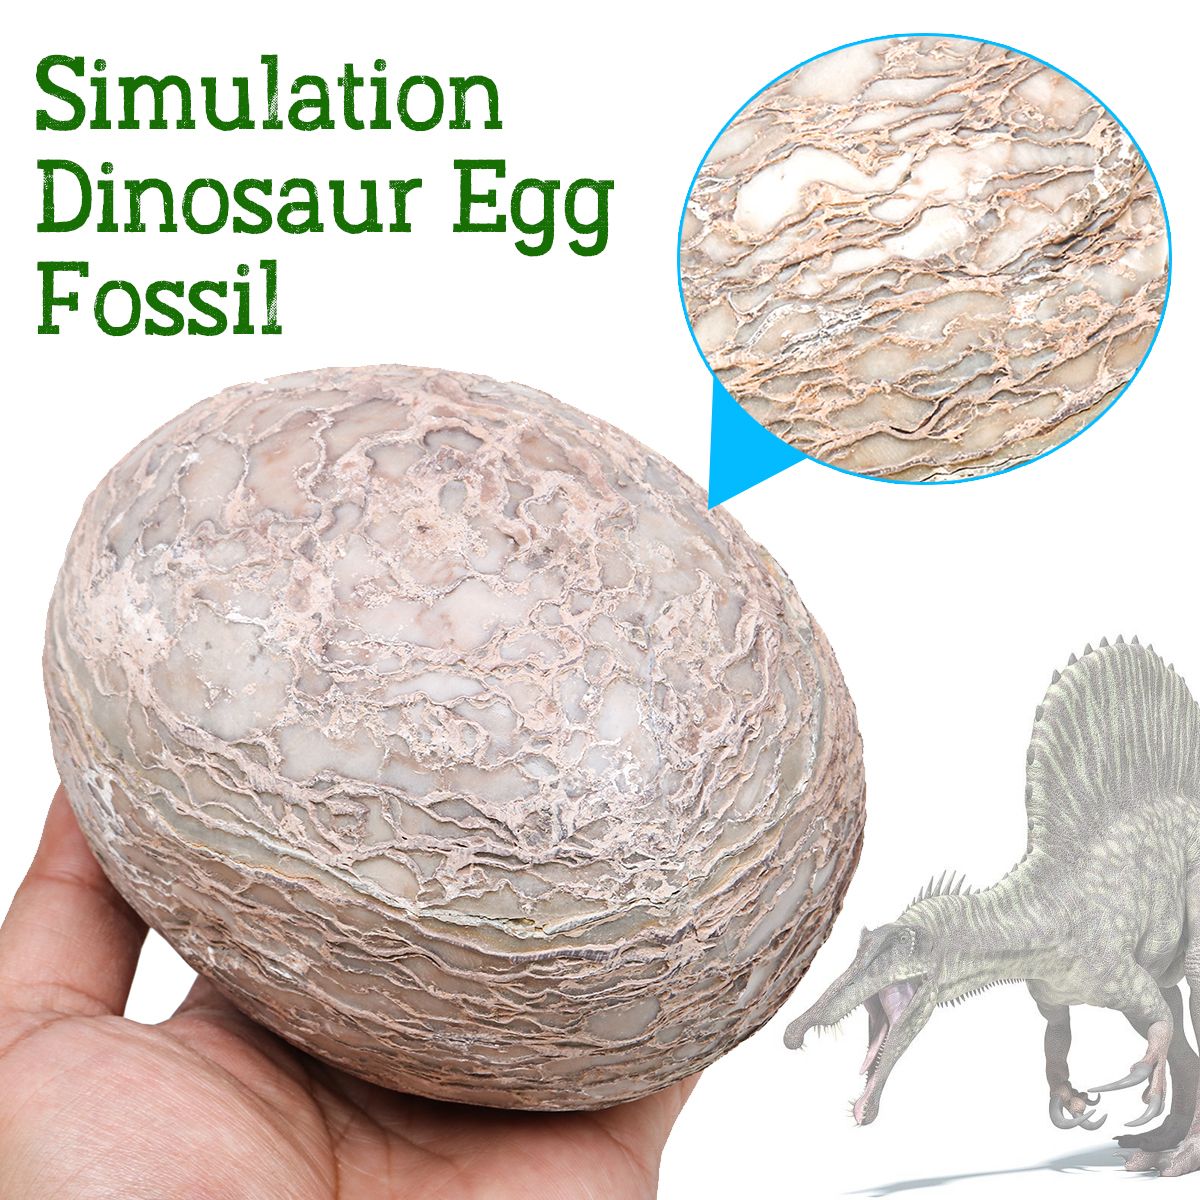 Segnosaur-Dinosaur-Egg-Simulation-Fossilized-Fossil-Teaching-Specimen-Room-Decorations-Gift-1399149